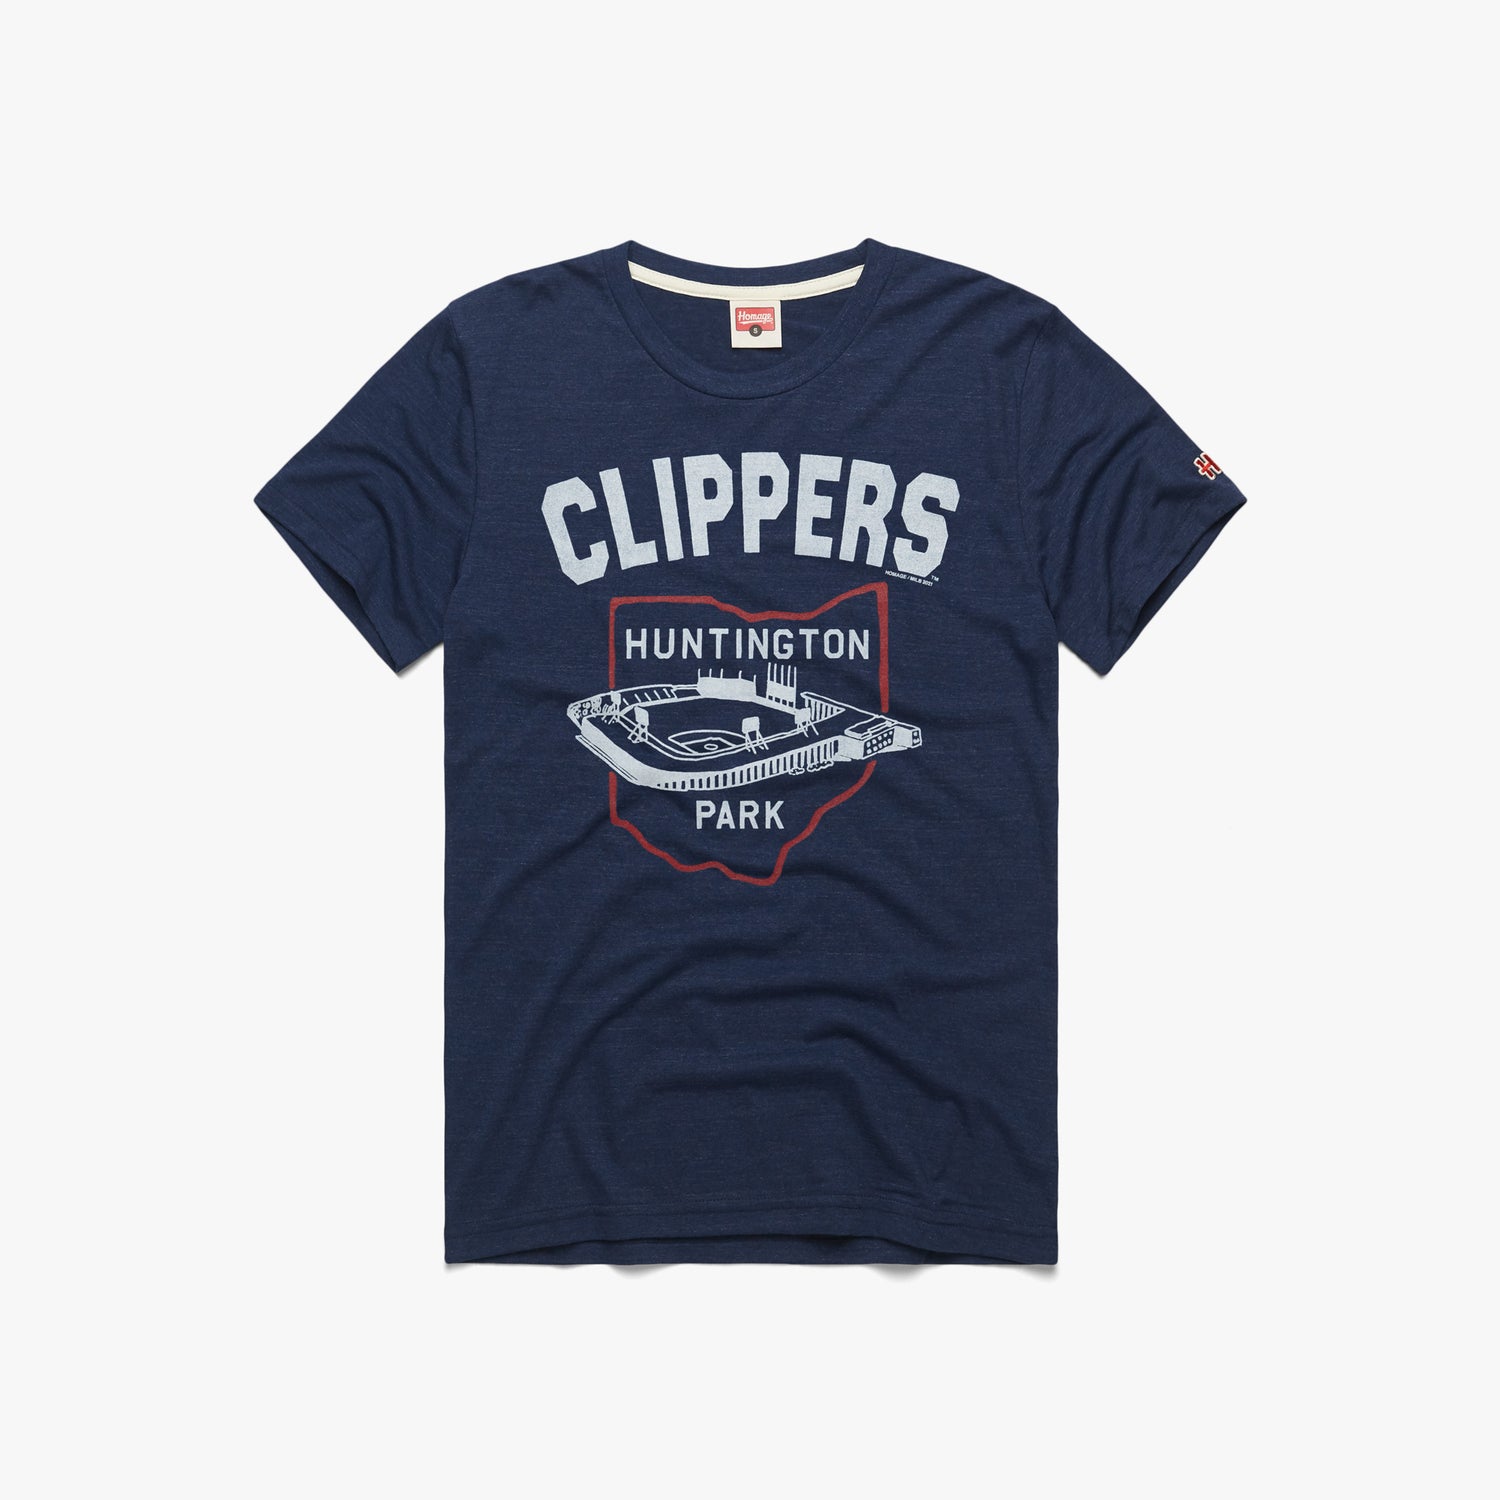 Clippers Huntington Park